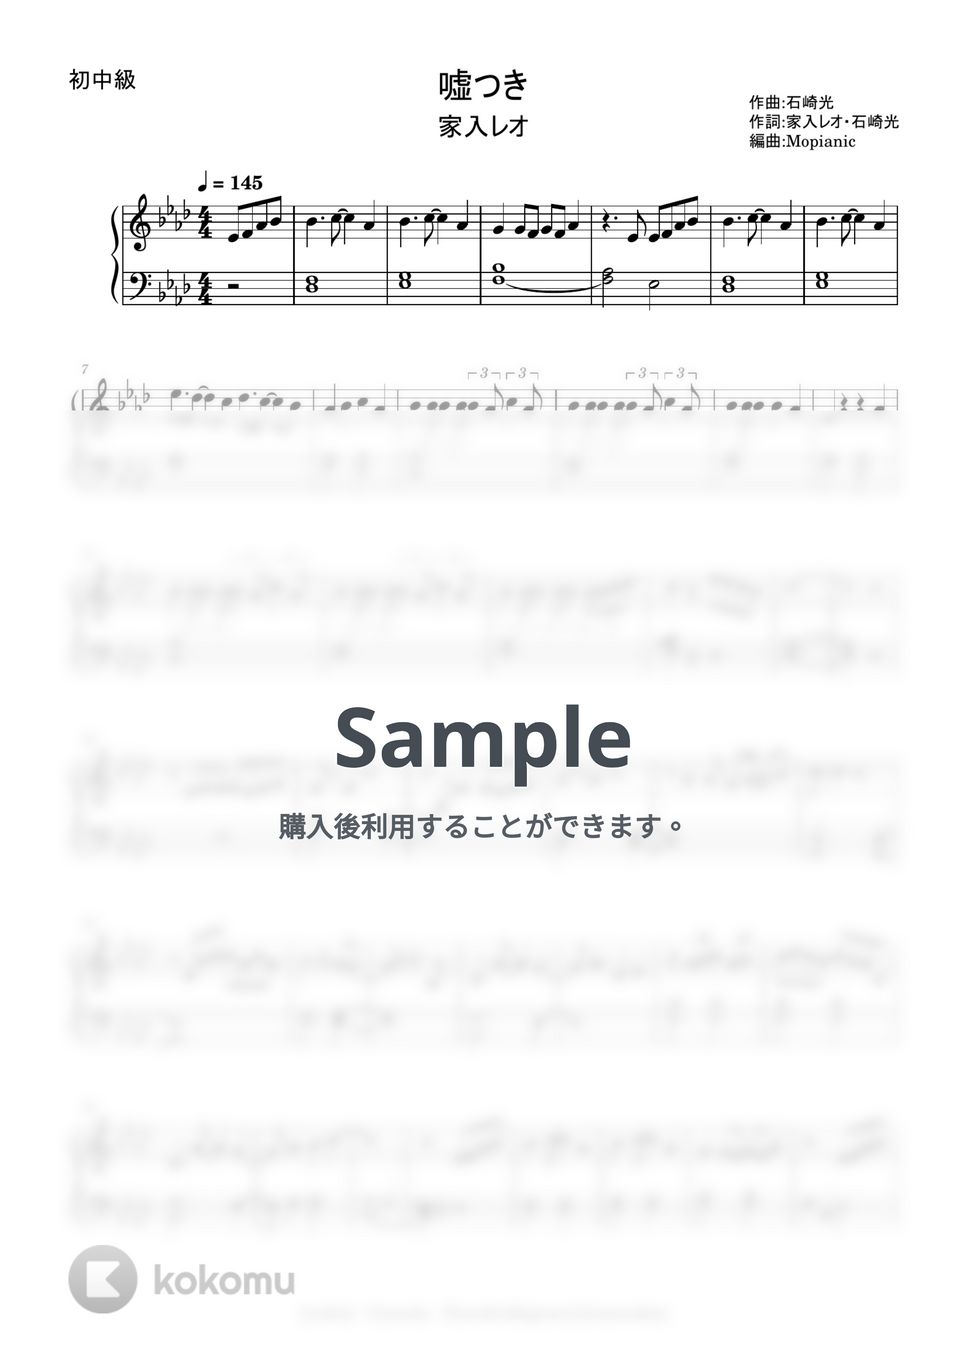 Leo Ieiri - Usotsuki (beginner to intermediate, piano) by Mopianic